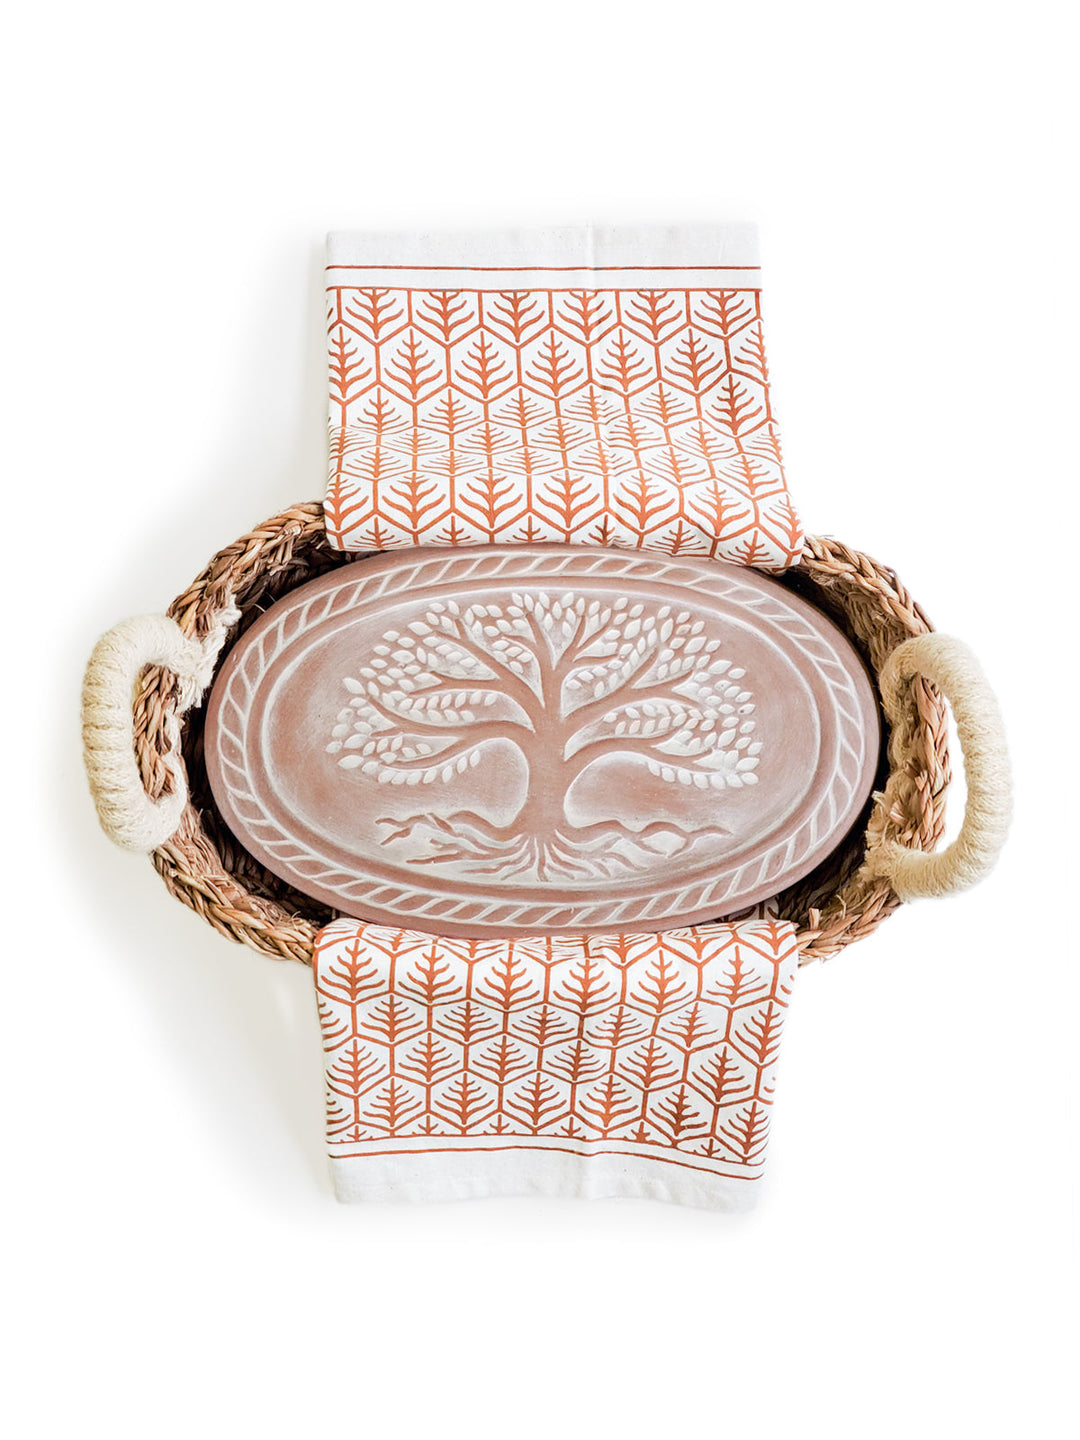 Bread Warmer & Basket Gift Set with Tea Towel - Tree of Life Oval-2